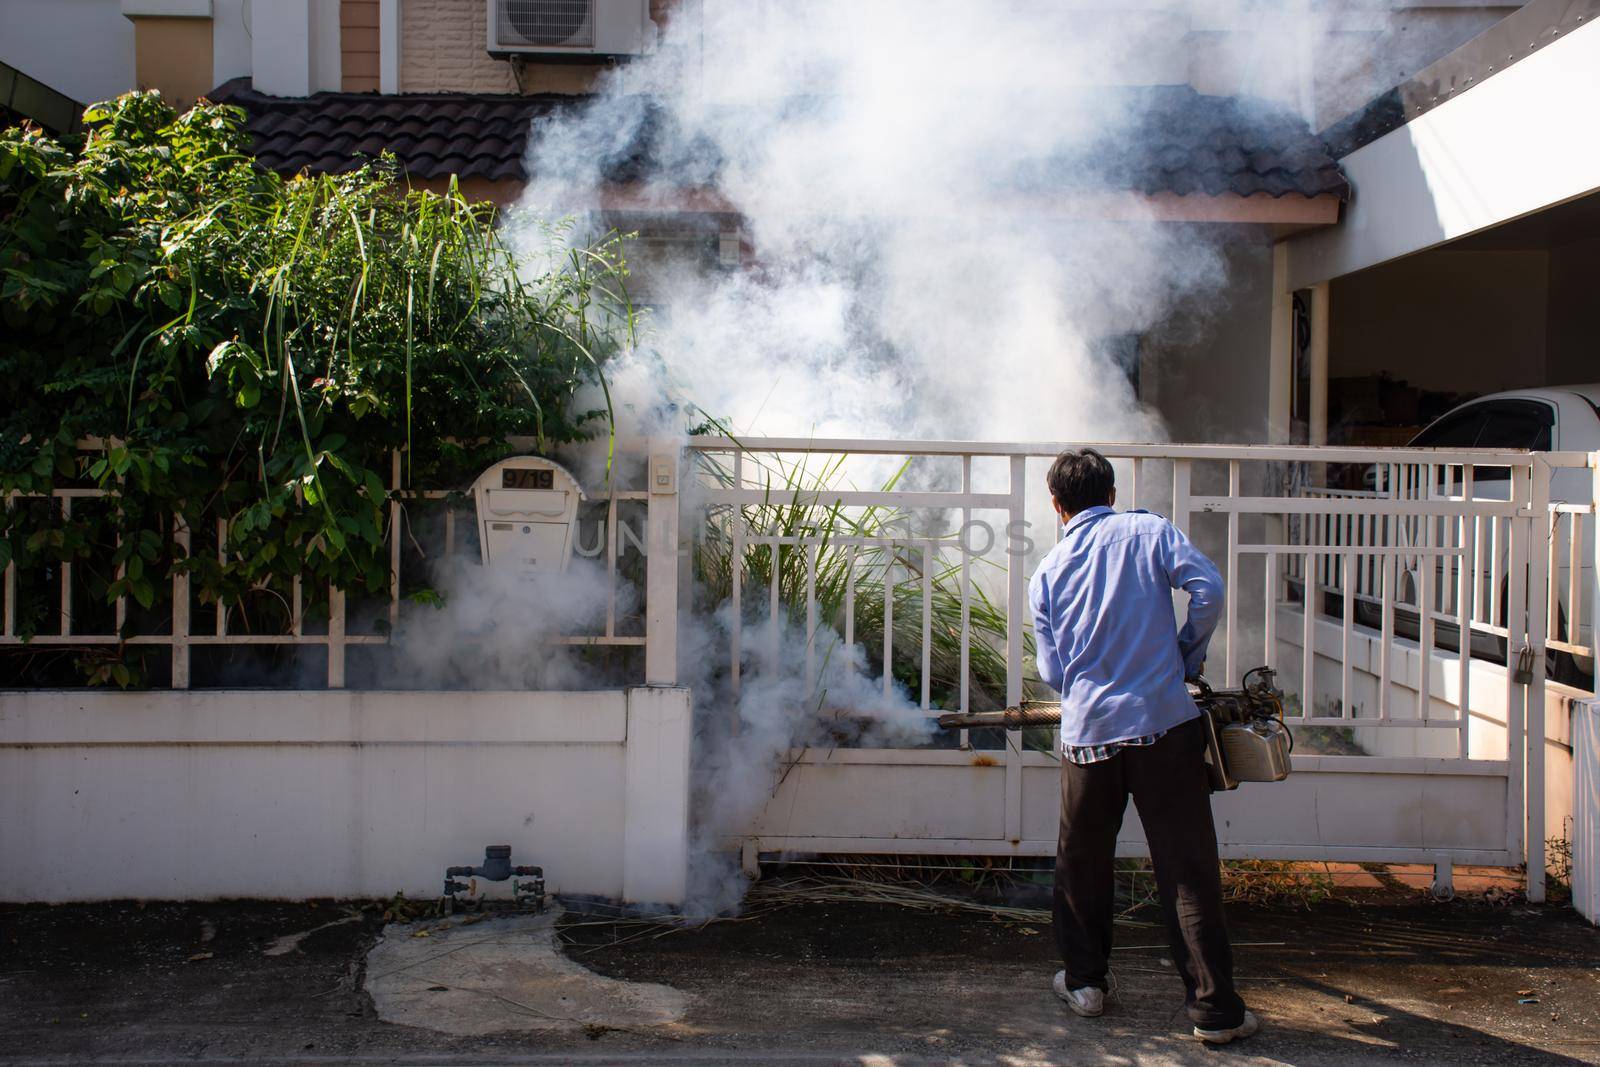 Fogging DDT spray mosquito kill for virus protect by PongMoji